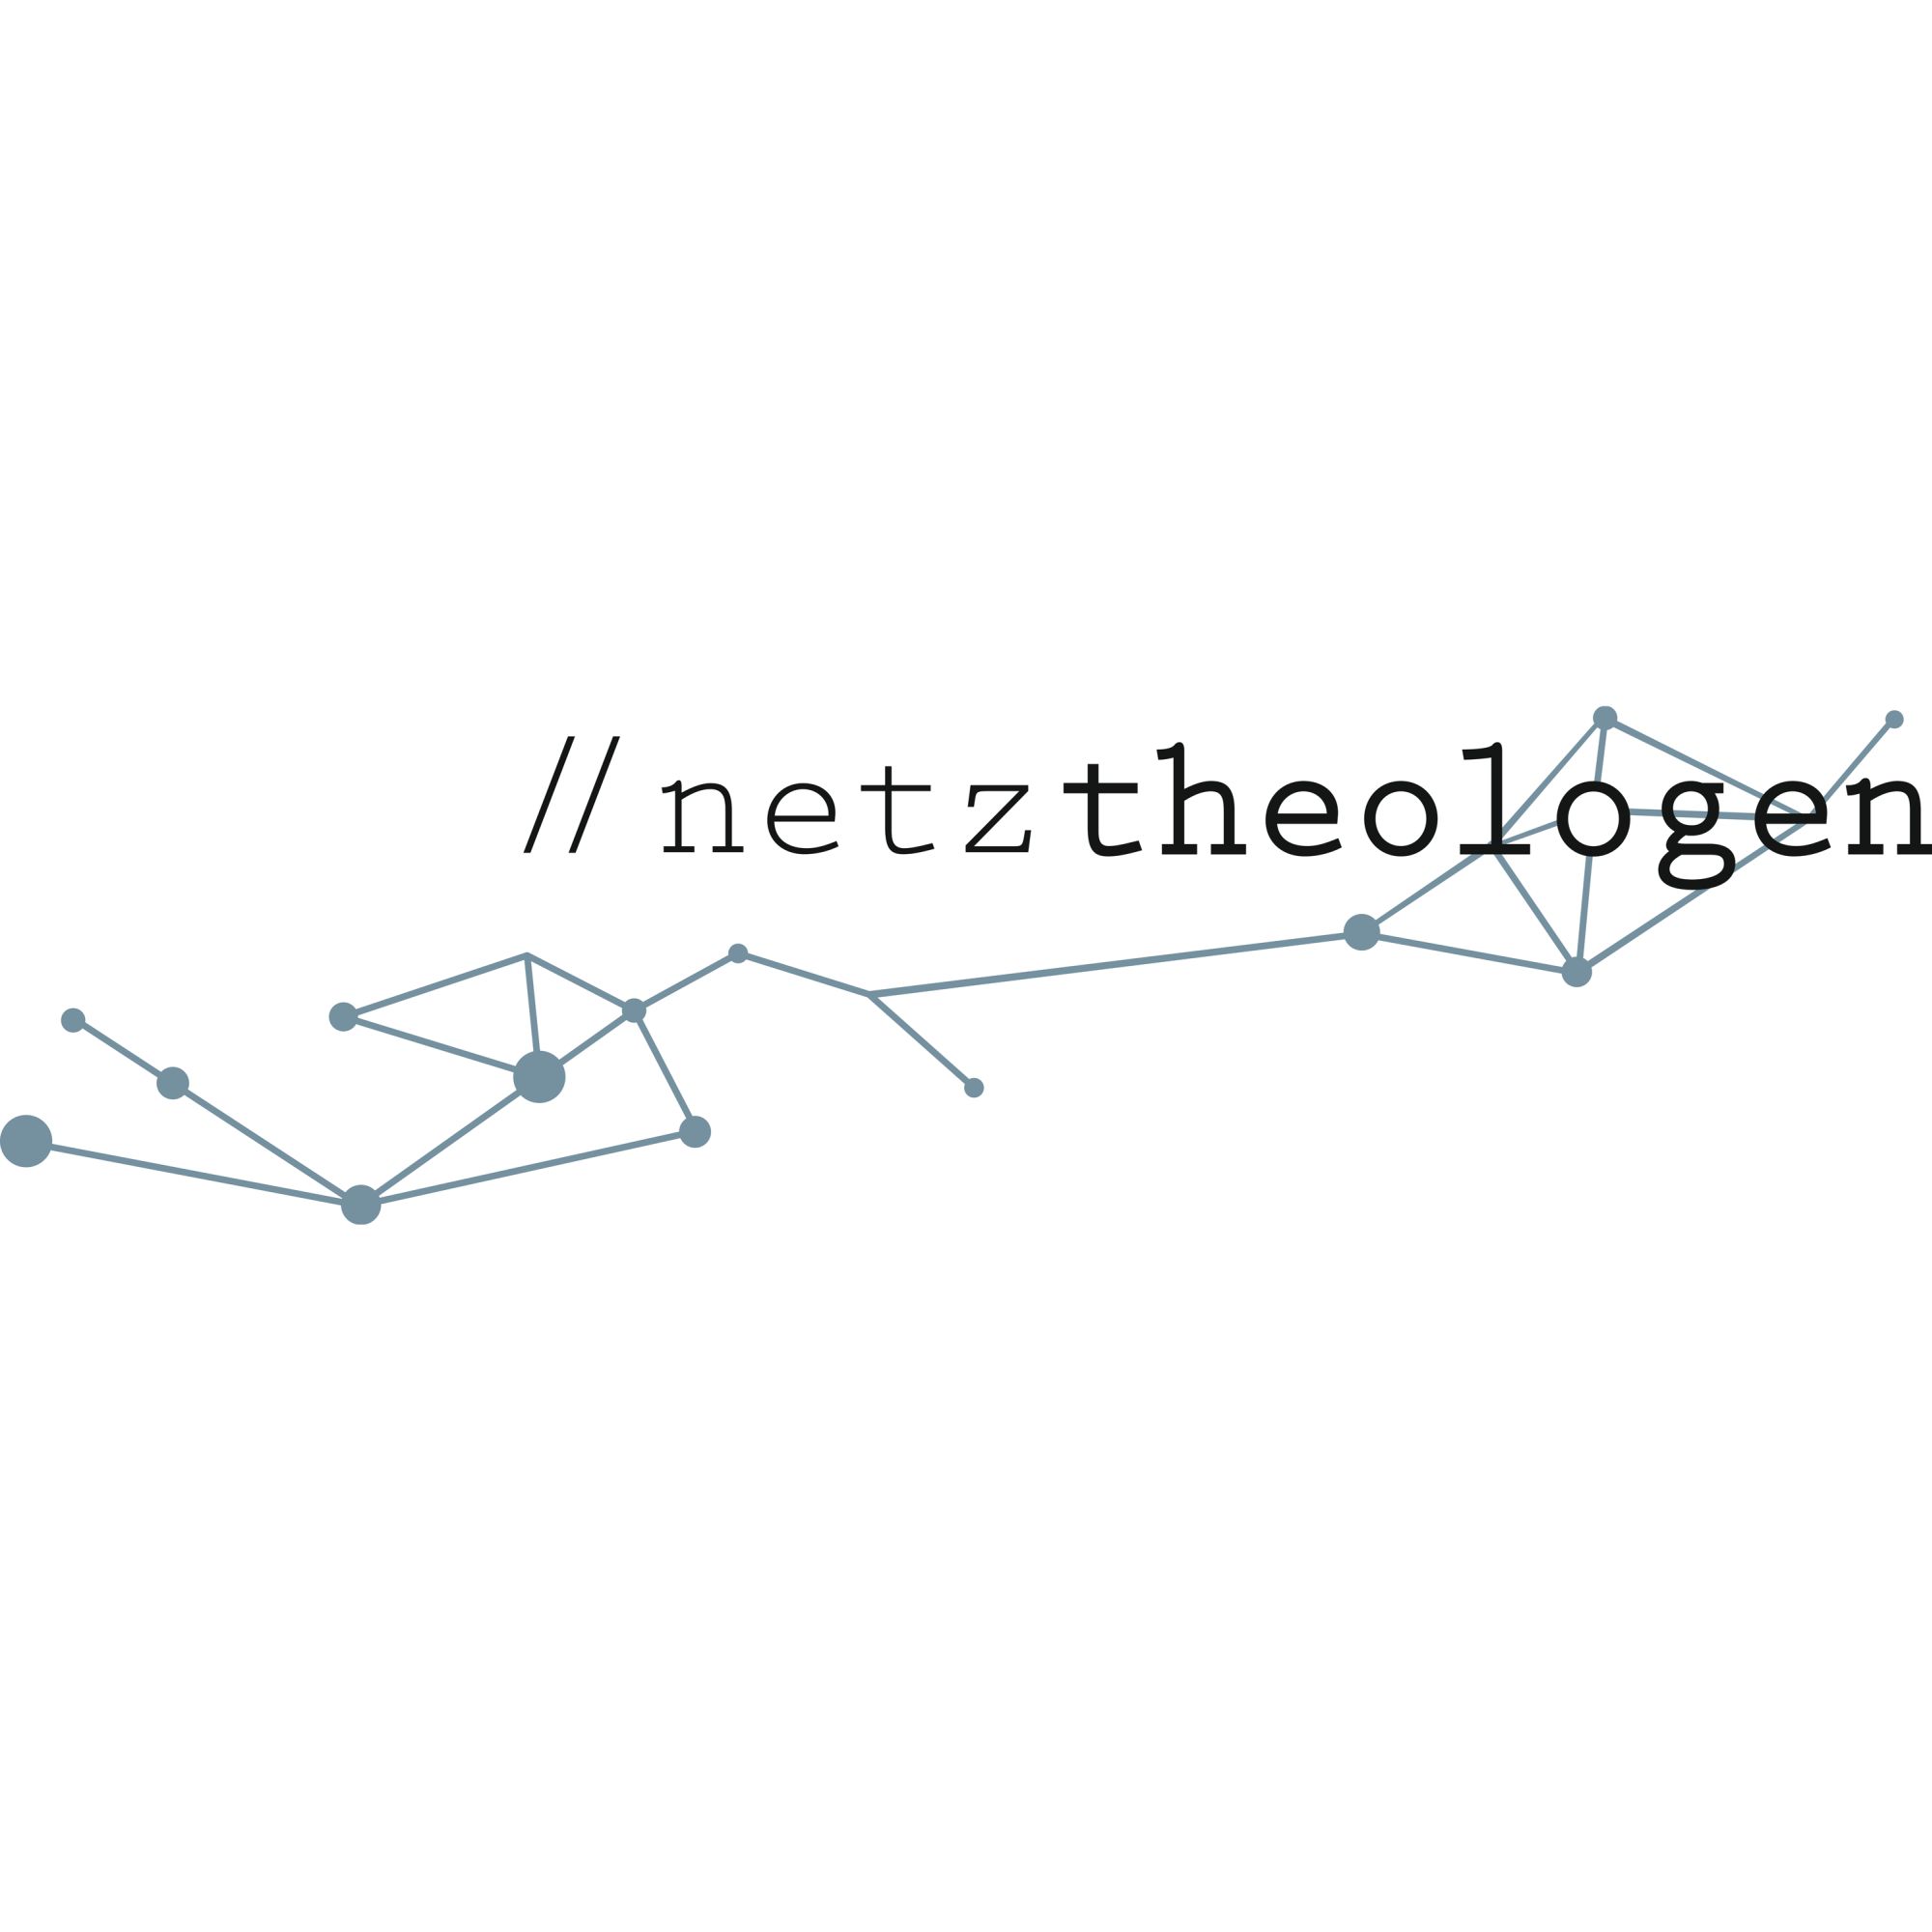 (c) Netztheologen.org